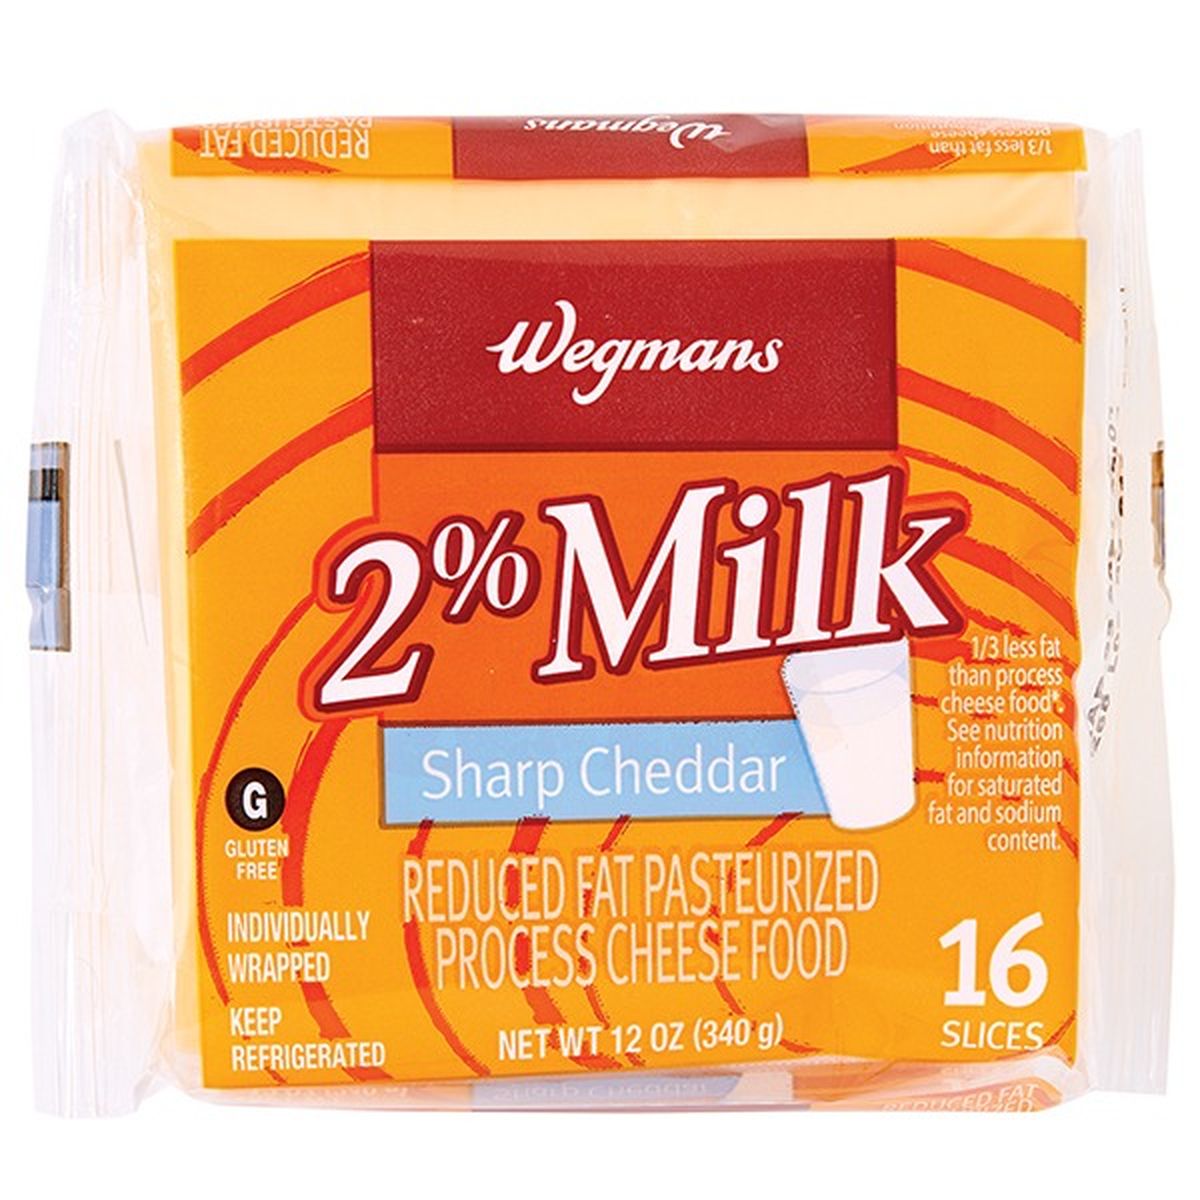 Calories in Wegmans Cheese, 2% Milk, Sharp Cheddar, Yellow, 16 Slices